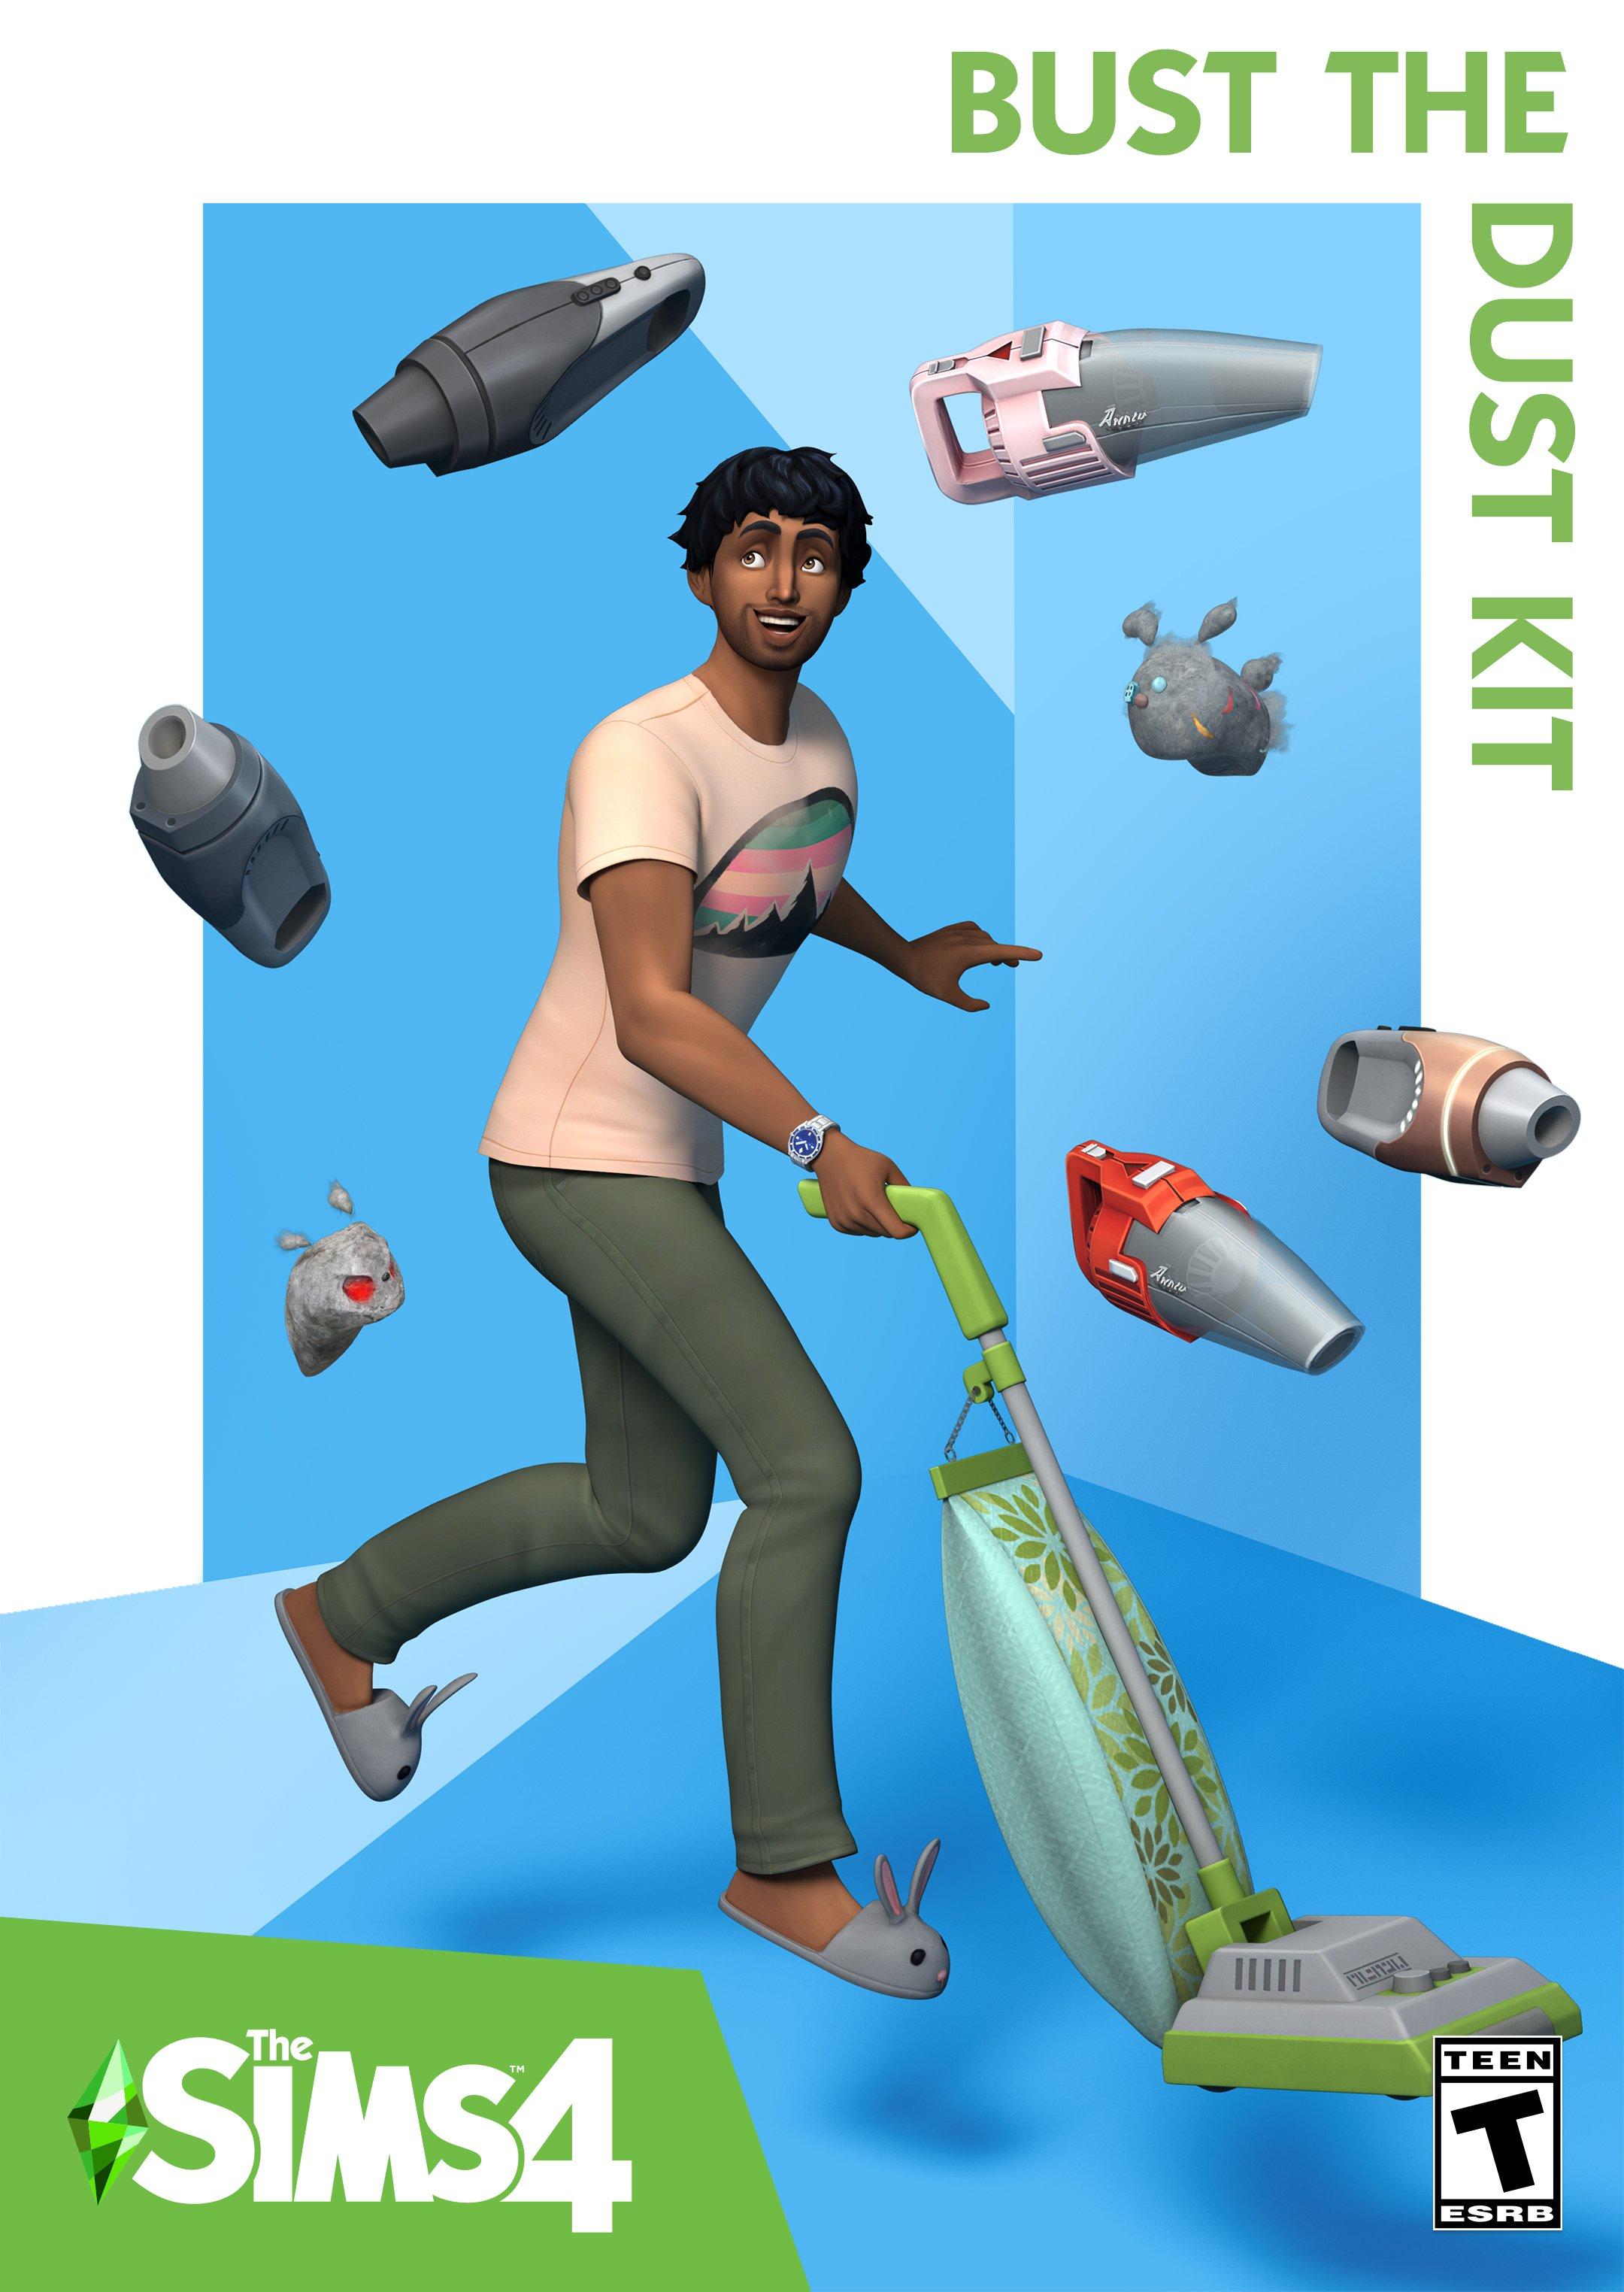 The Sims 4: Bust The Dust Kit DLC